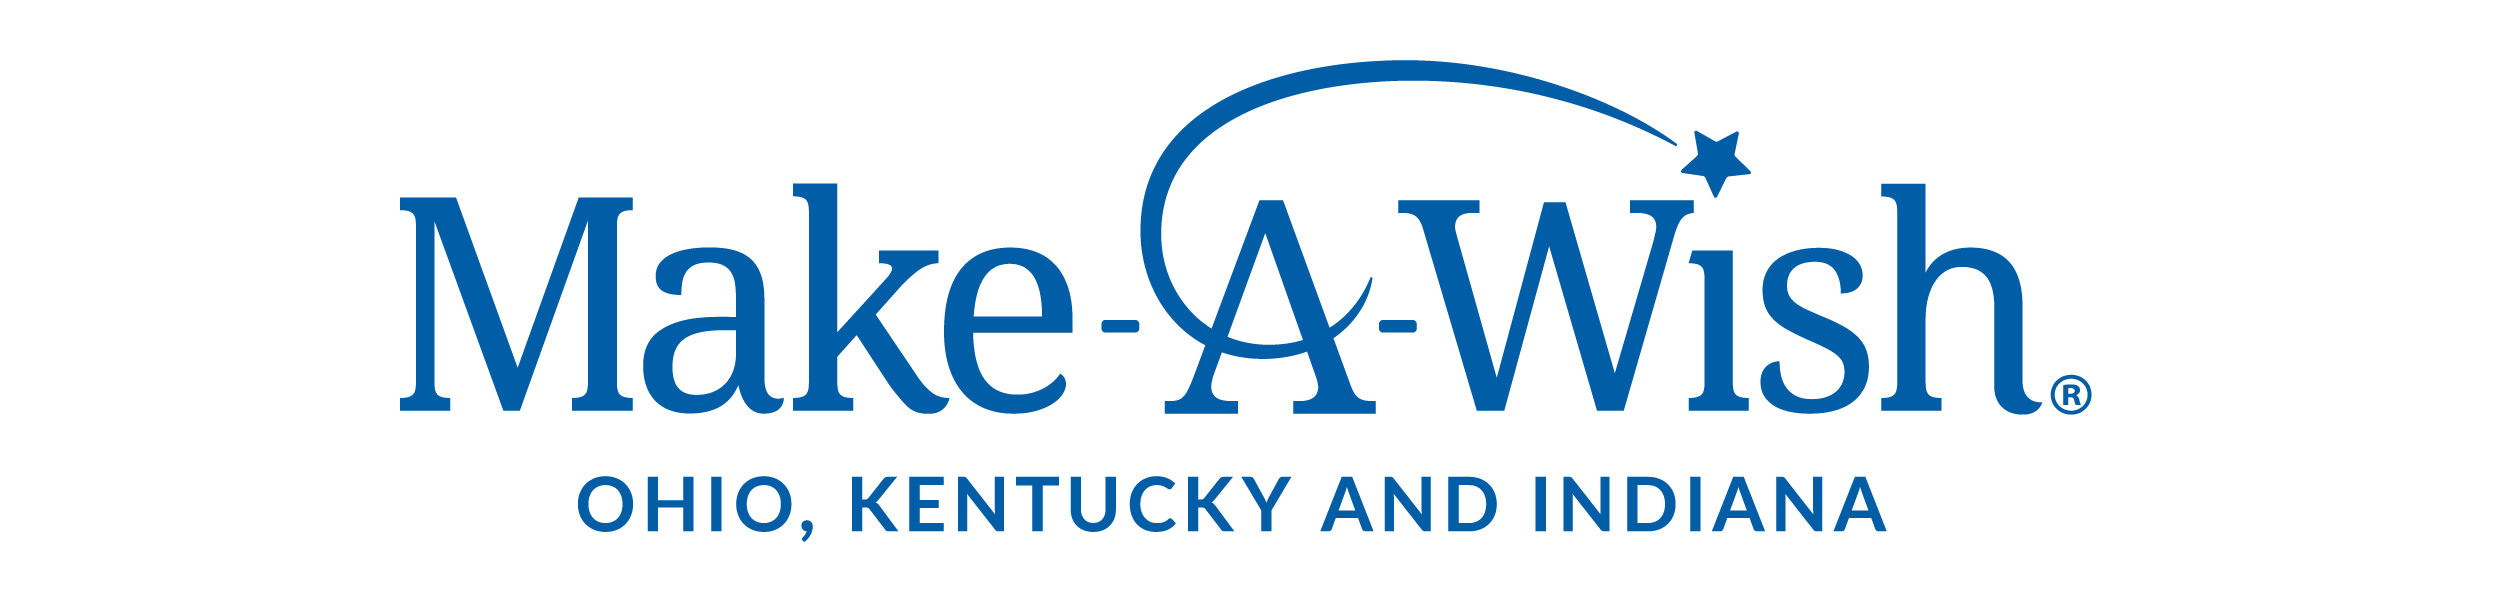 Make-A-Wish Ohio, Kentucky & Indiana logo